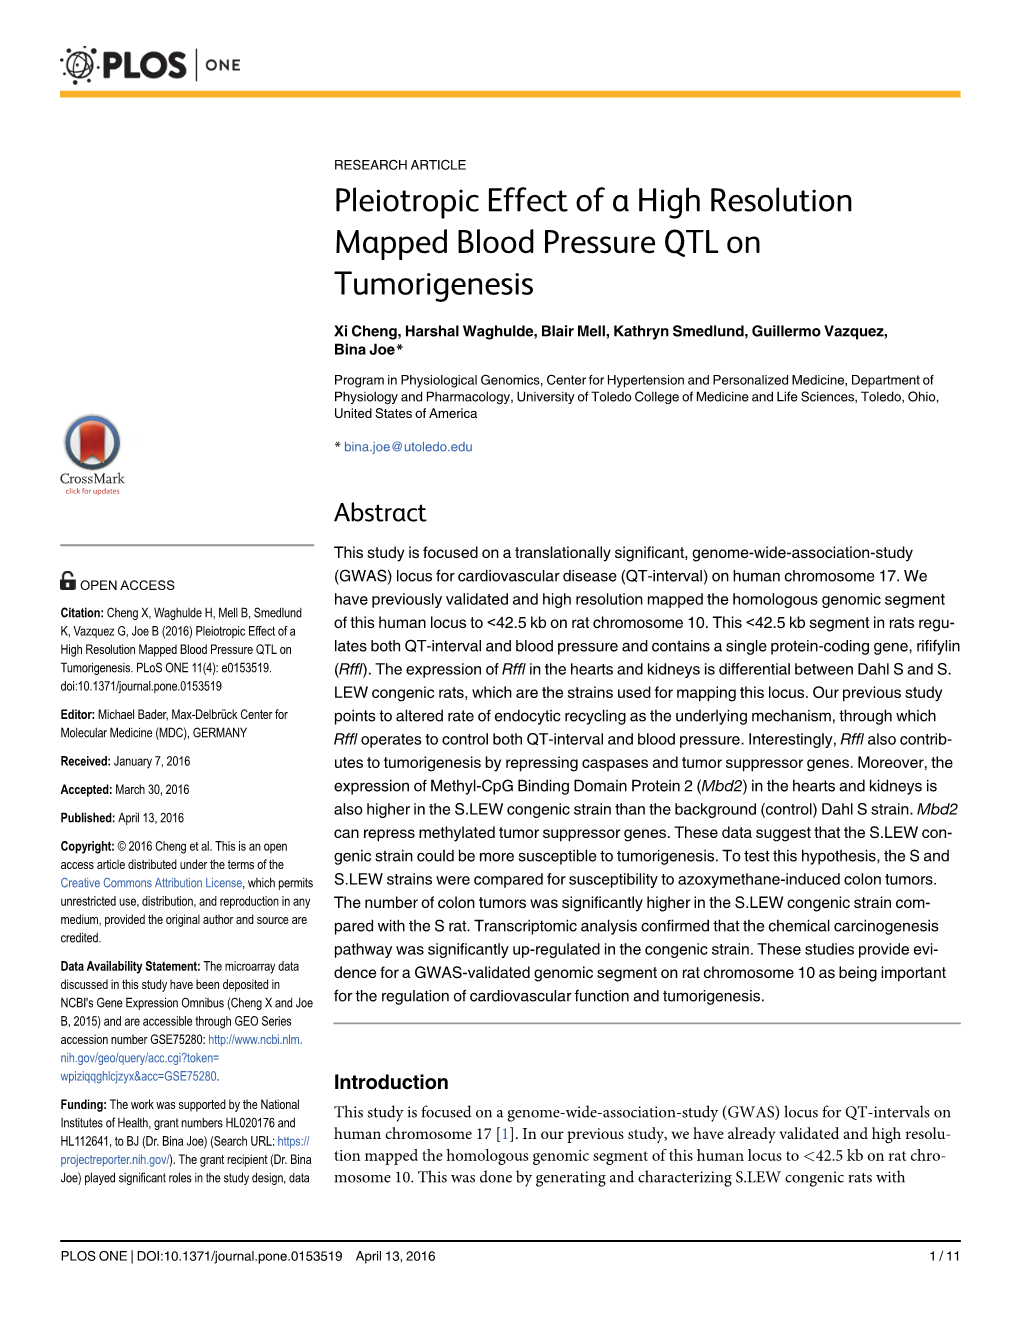 Pleiotropic Effect of a High Resolution Mapped Blood Pressure QTL on Tumorigenesis